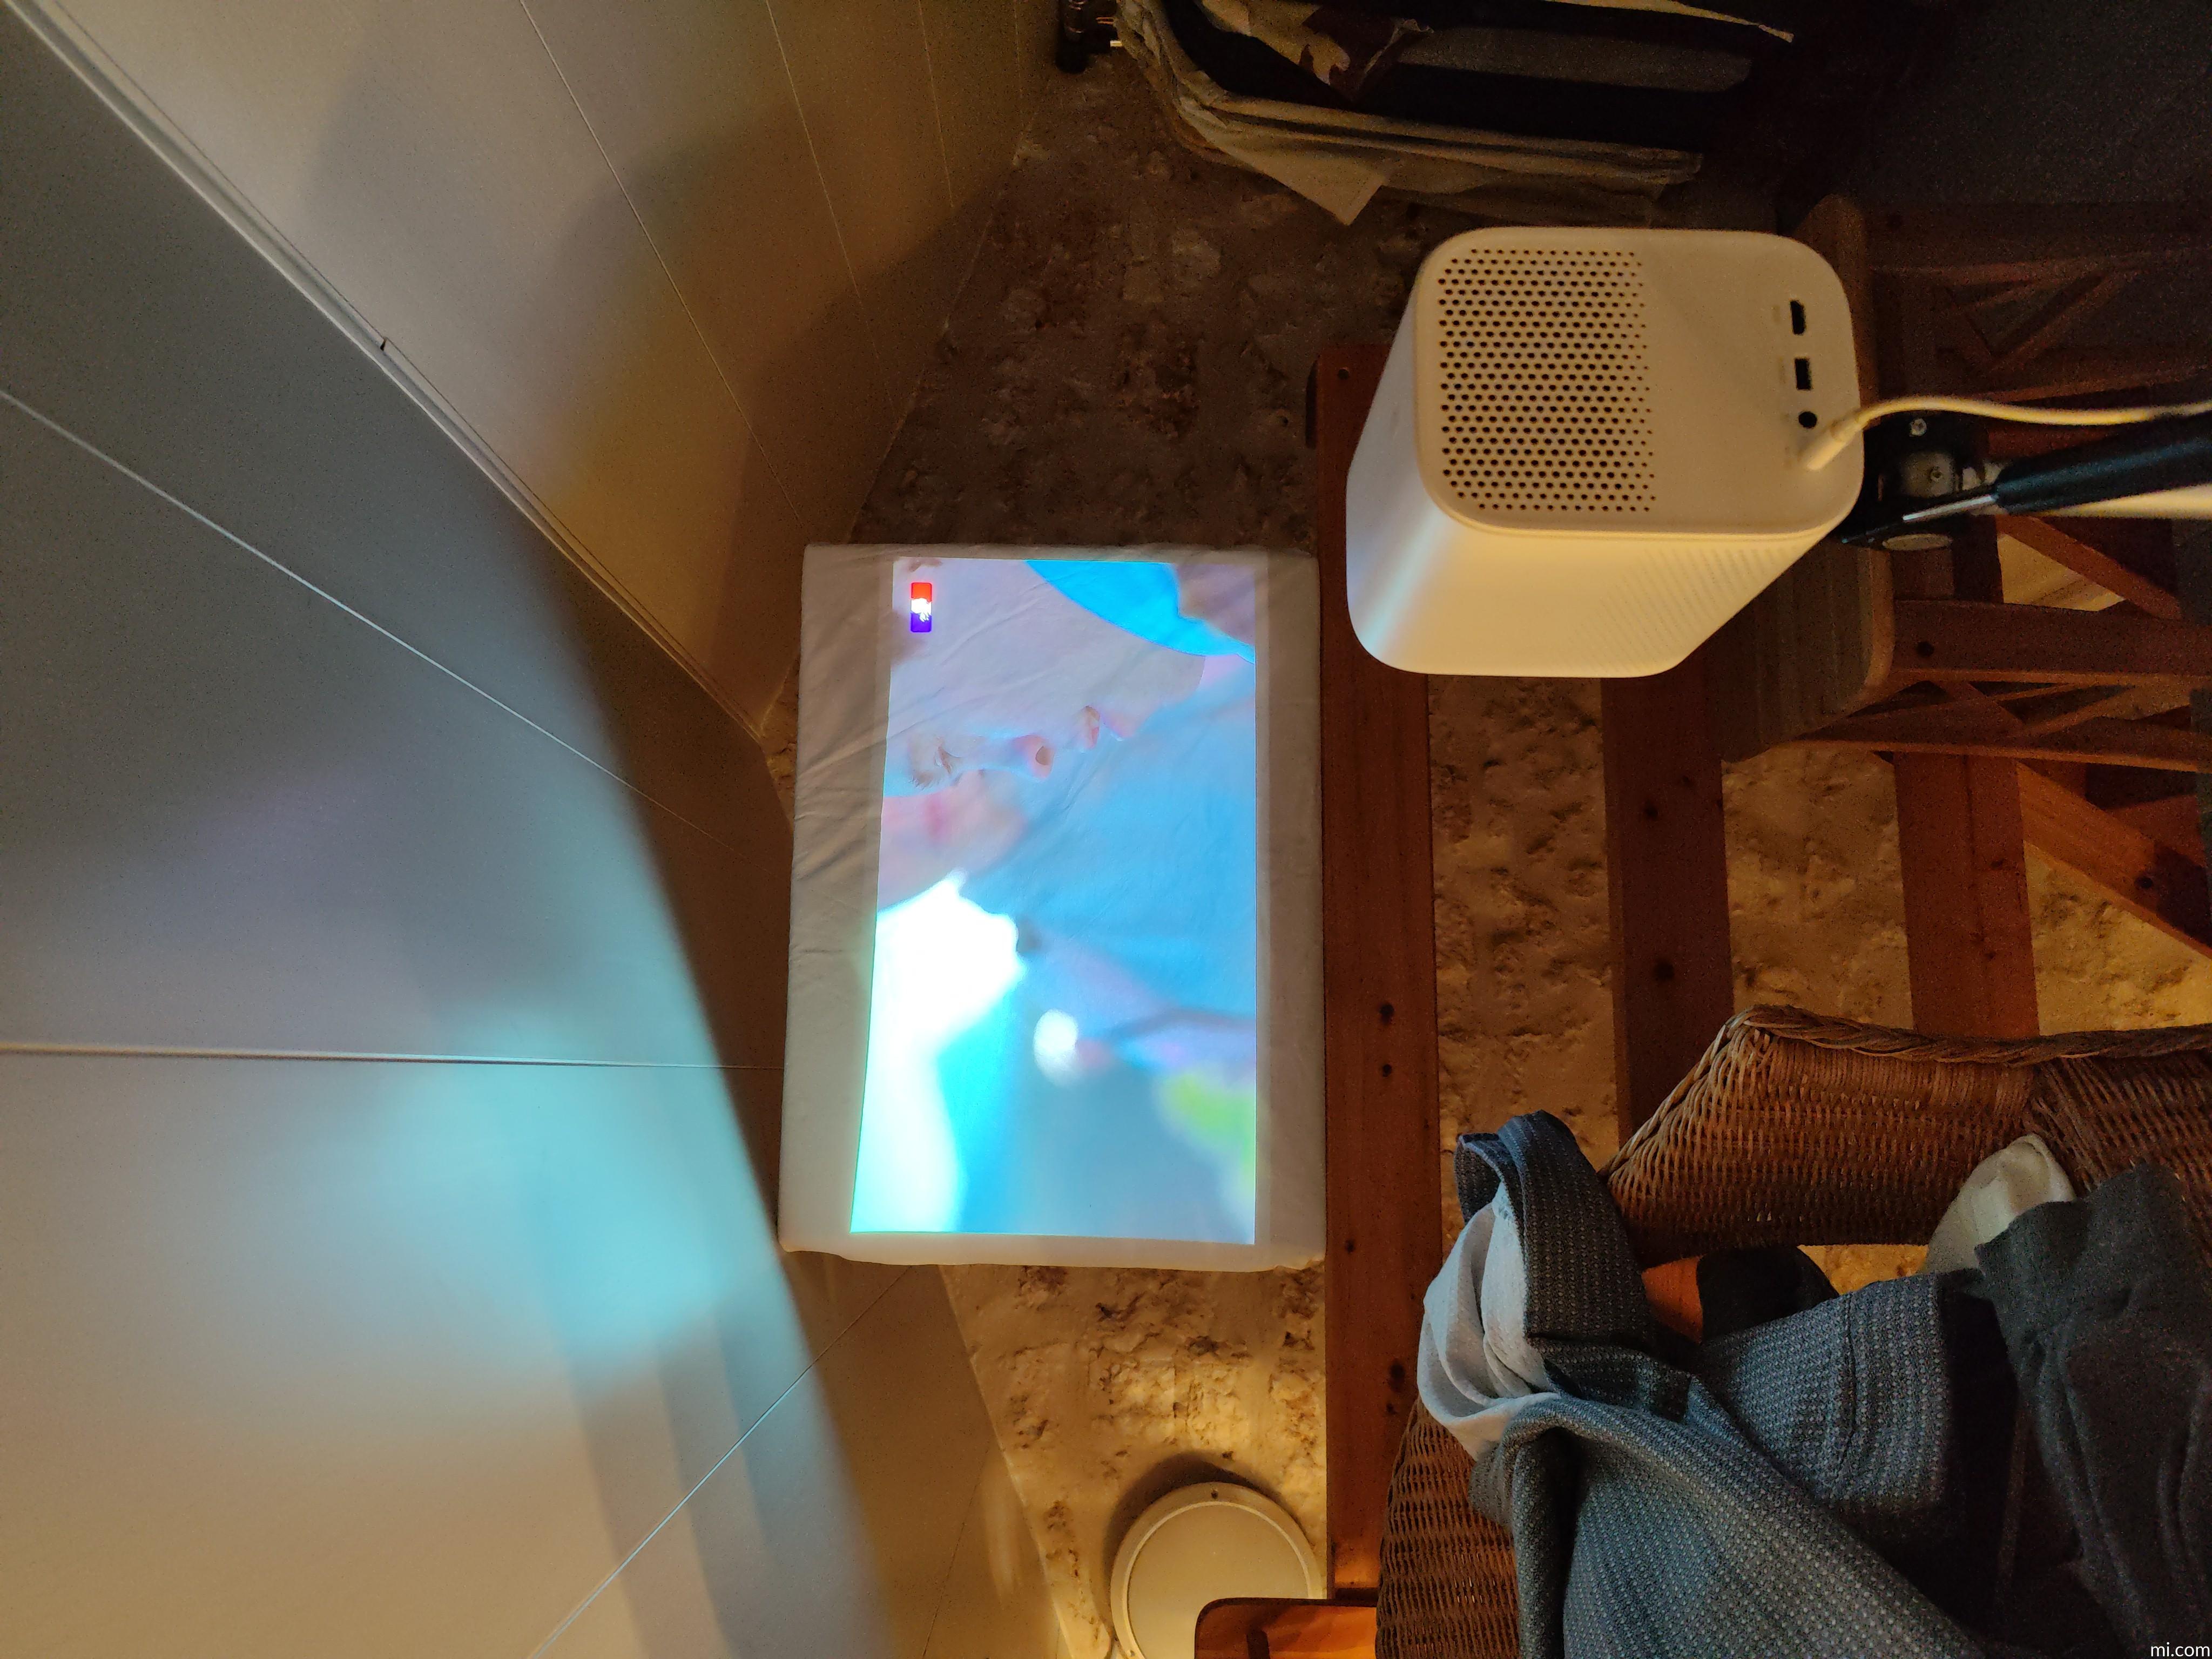 XIAOMI COUPE DU MONDE Xiaomi MI SMART PROJECTOR 2 - Projecteur